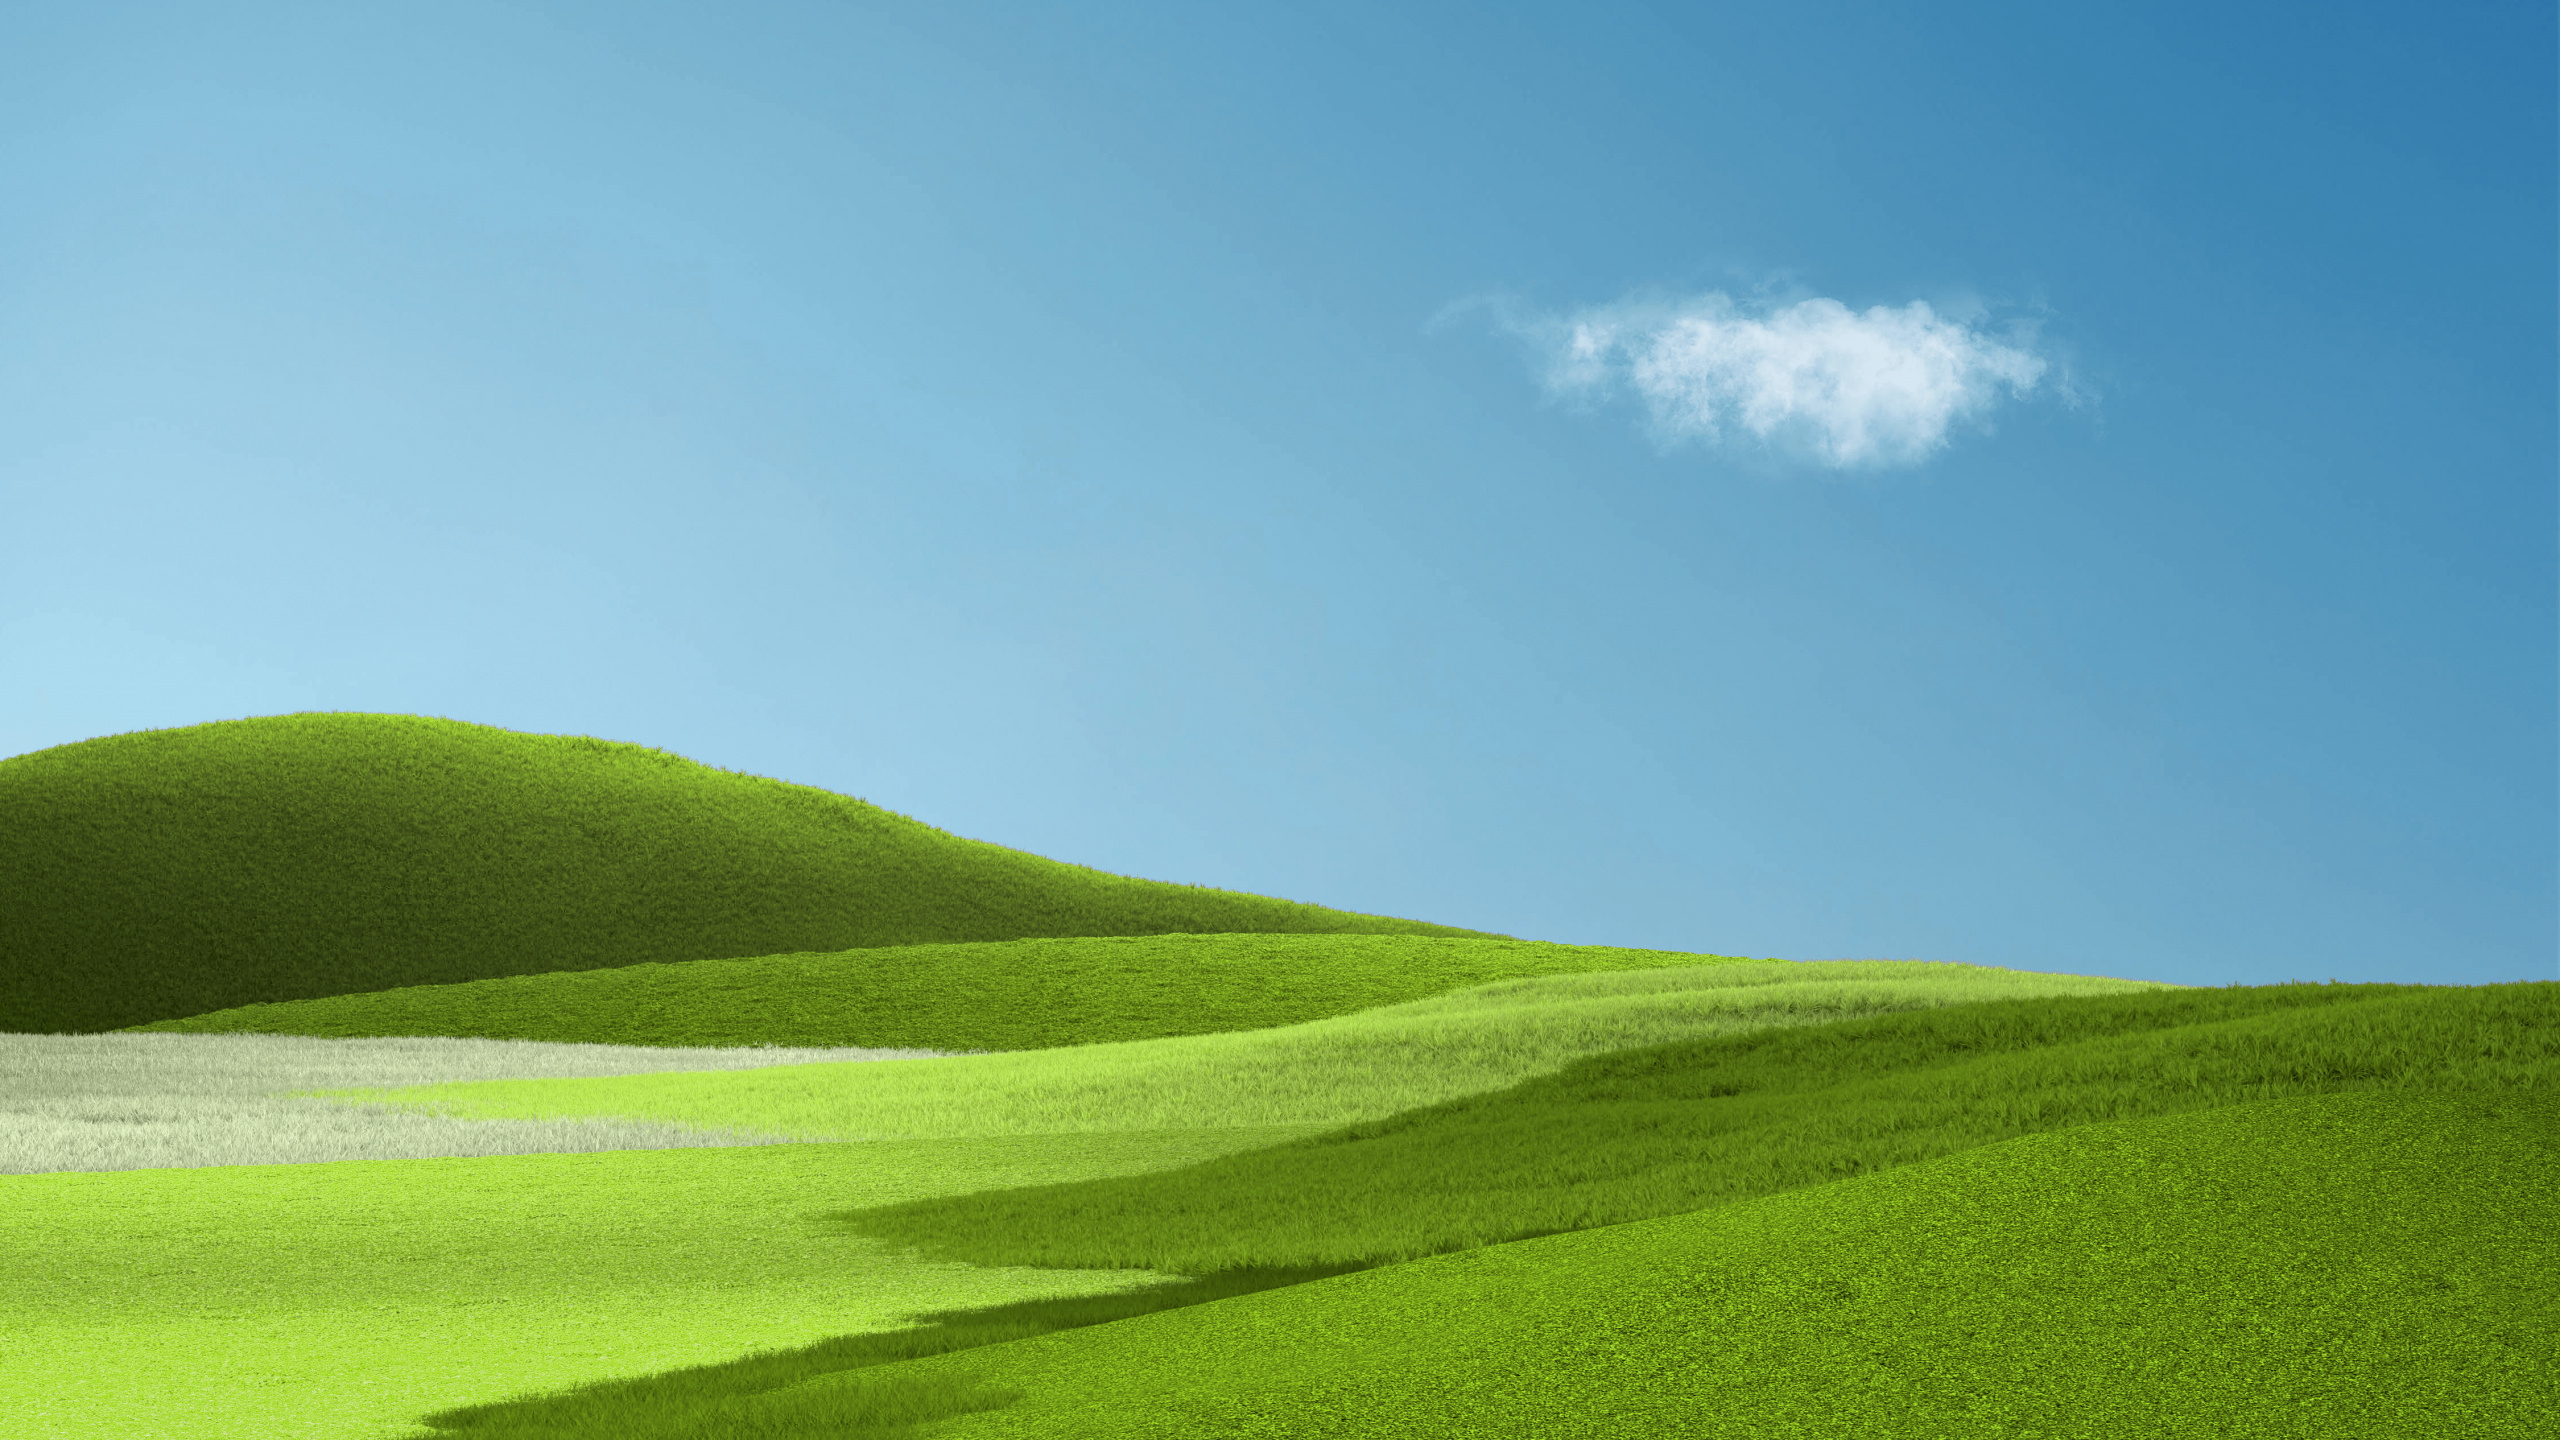 Grassland: Green field, Outside in the open, Outside environment, Pastureland. 2560x1440 HD Wallpaper.